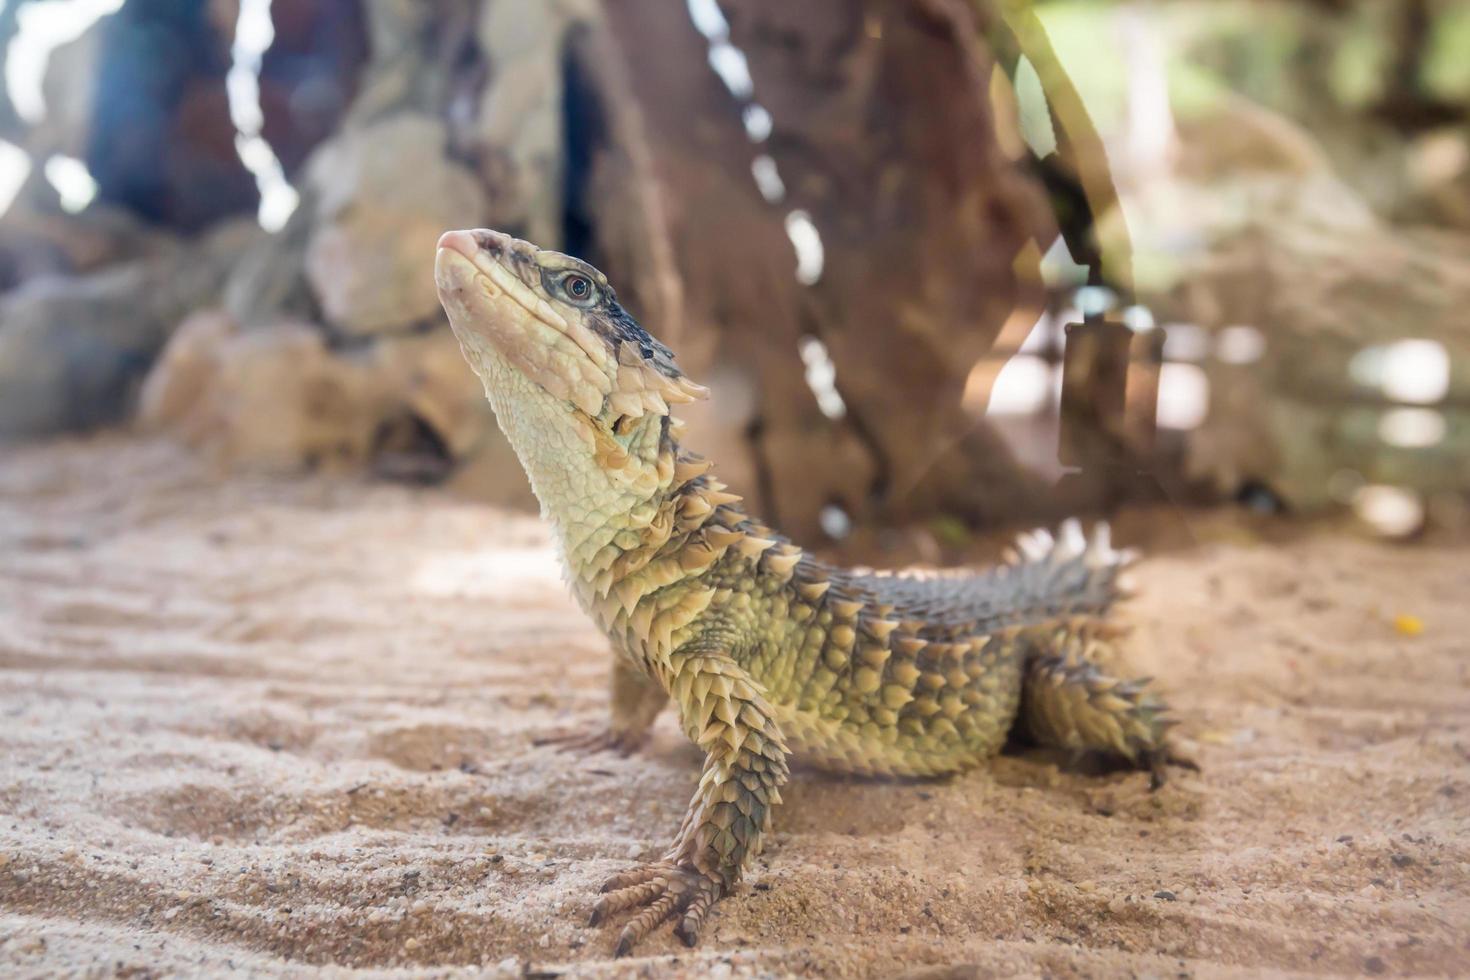 Close-up of a Sungazer, Giant girdled lizard photo